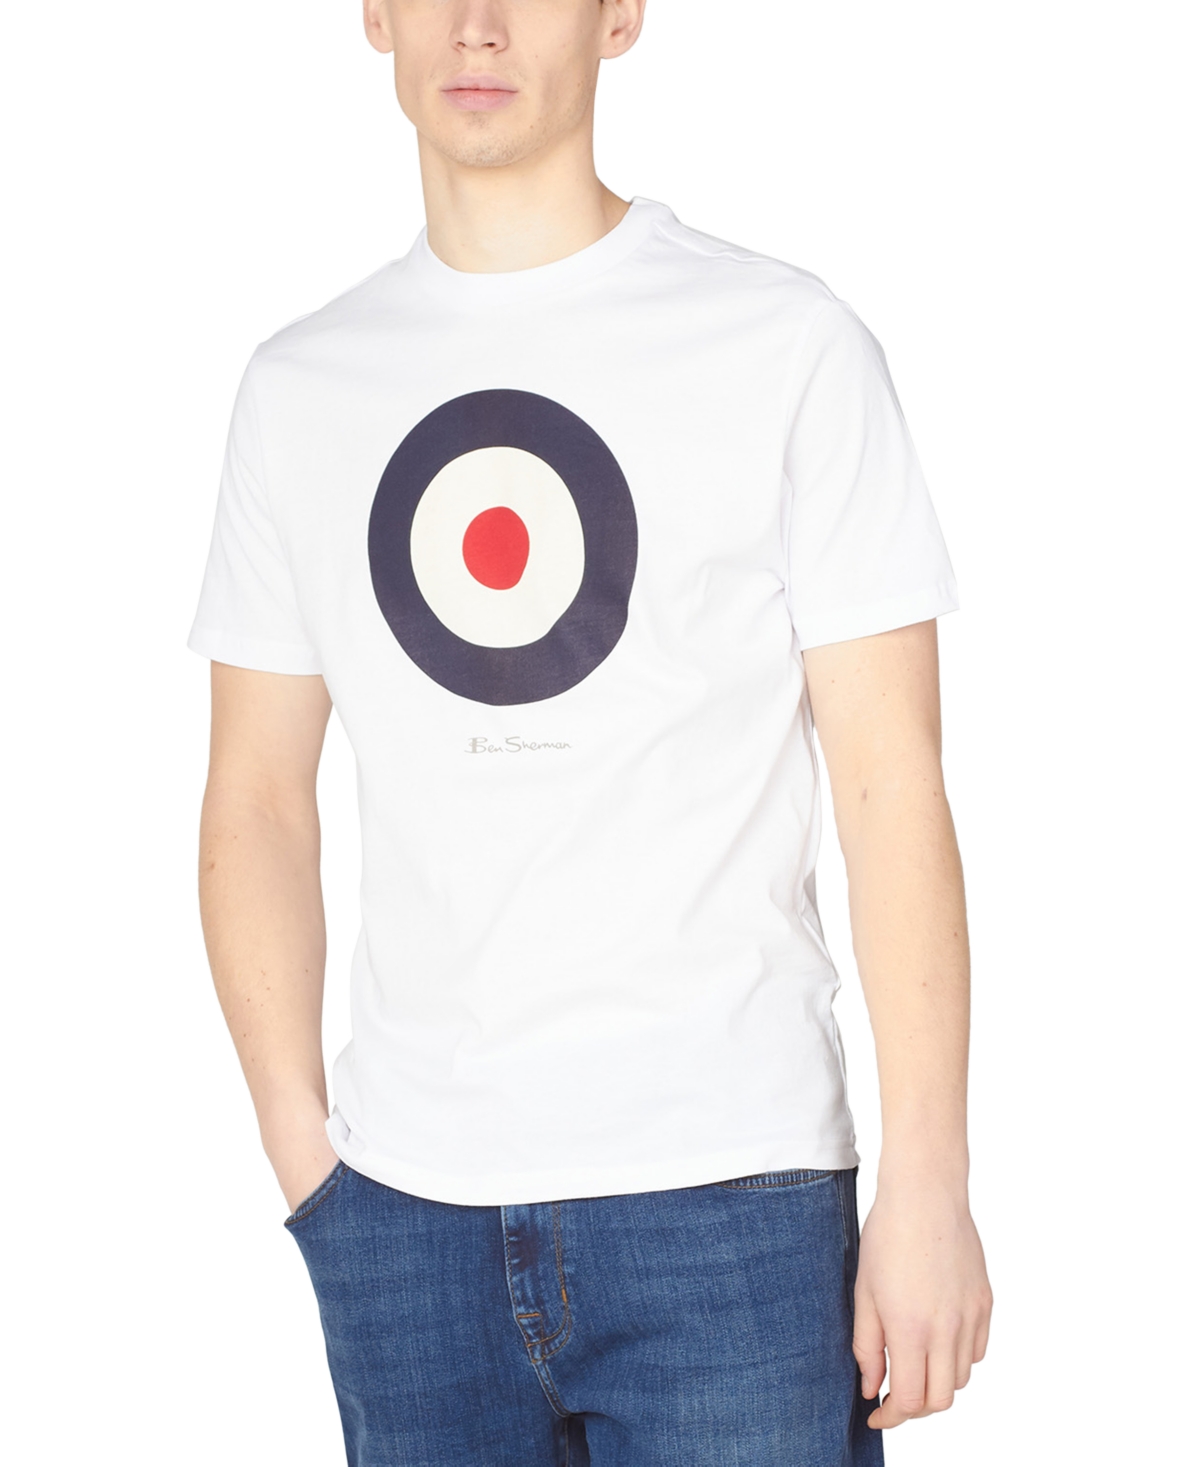 Men's Signature Target Graphic Short-Sleeve T-Shirt - White